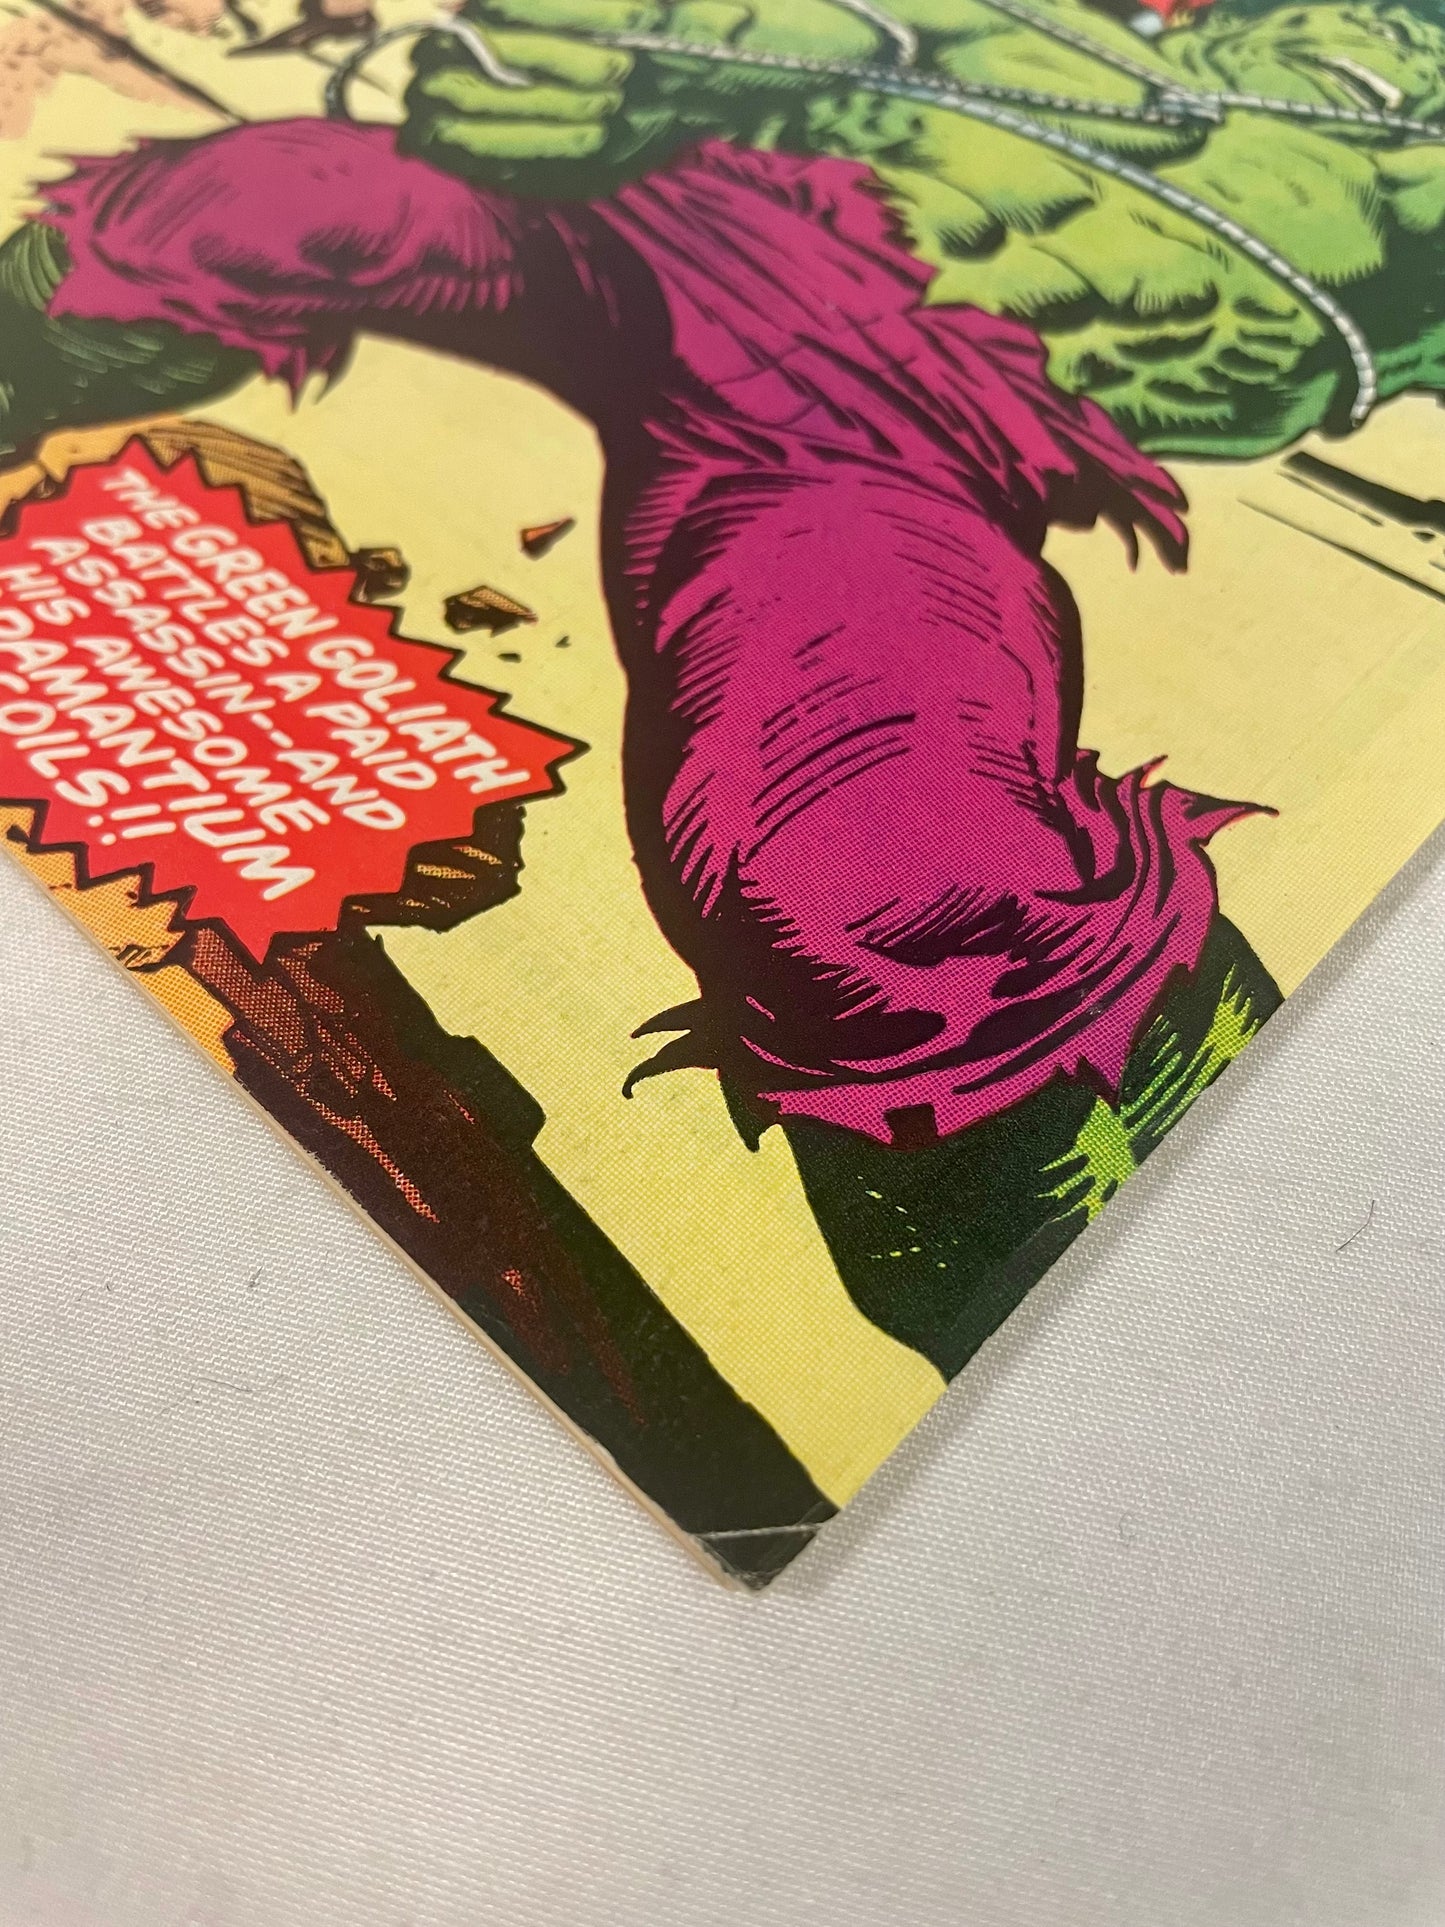 Marvel Comics The Incredible Hulk #212